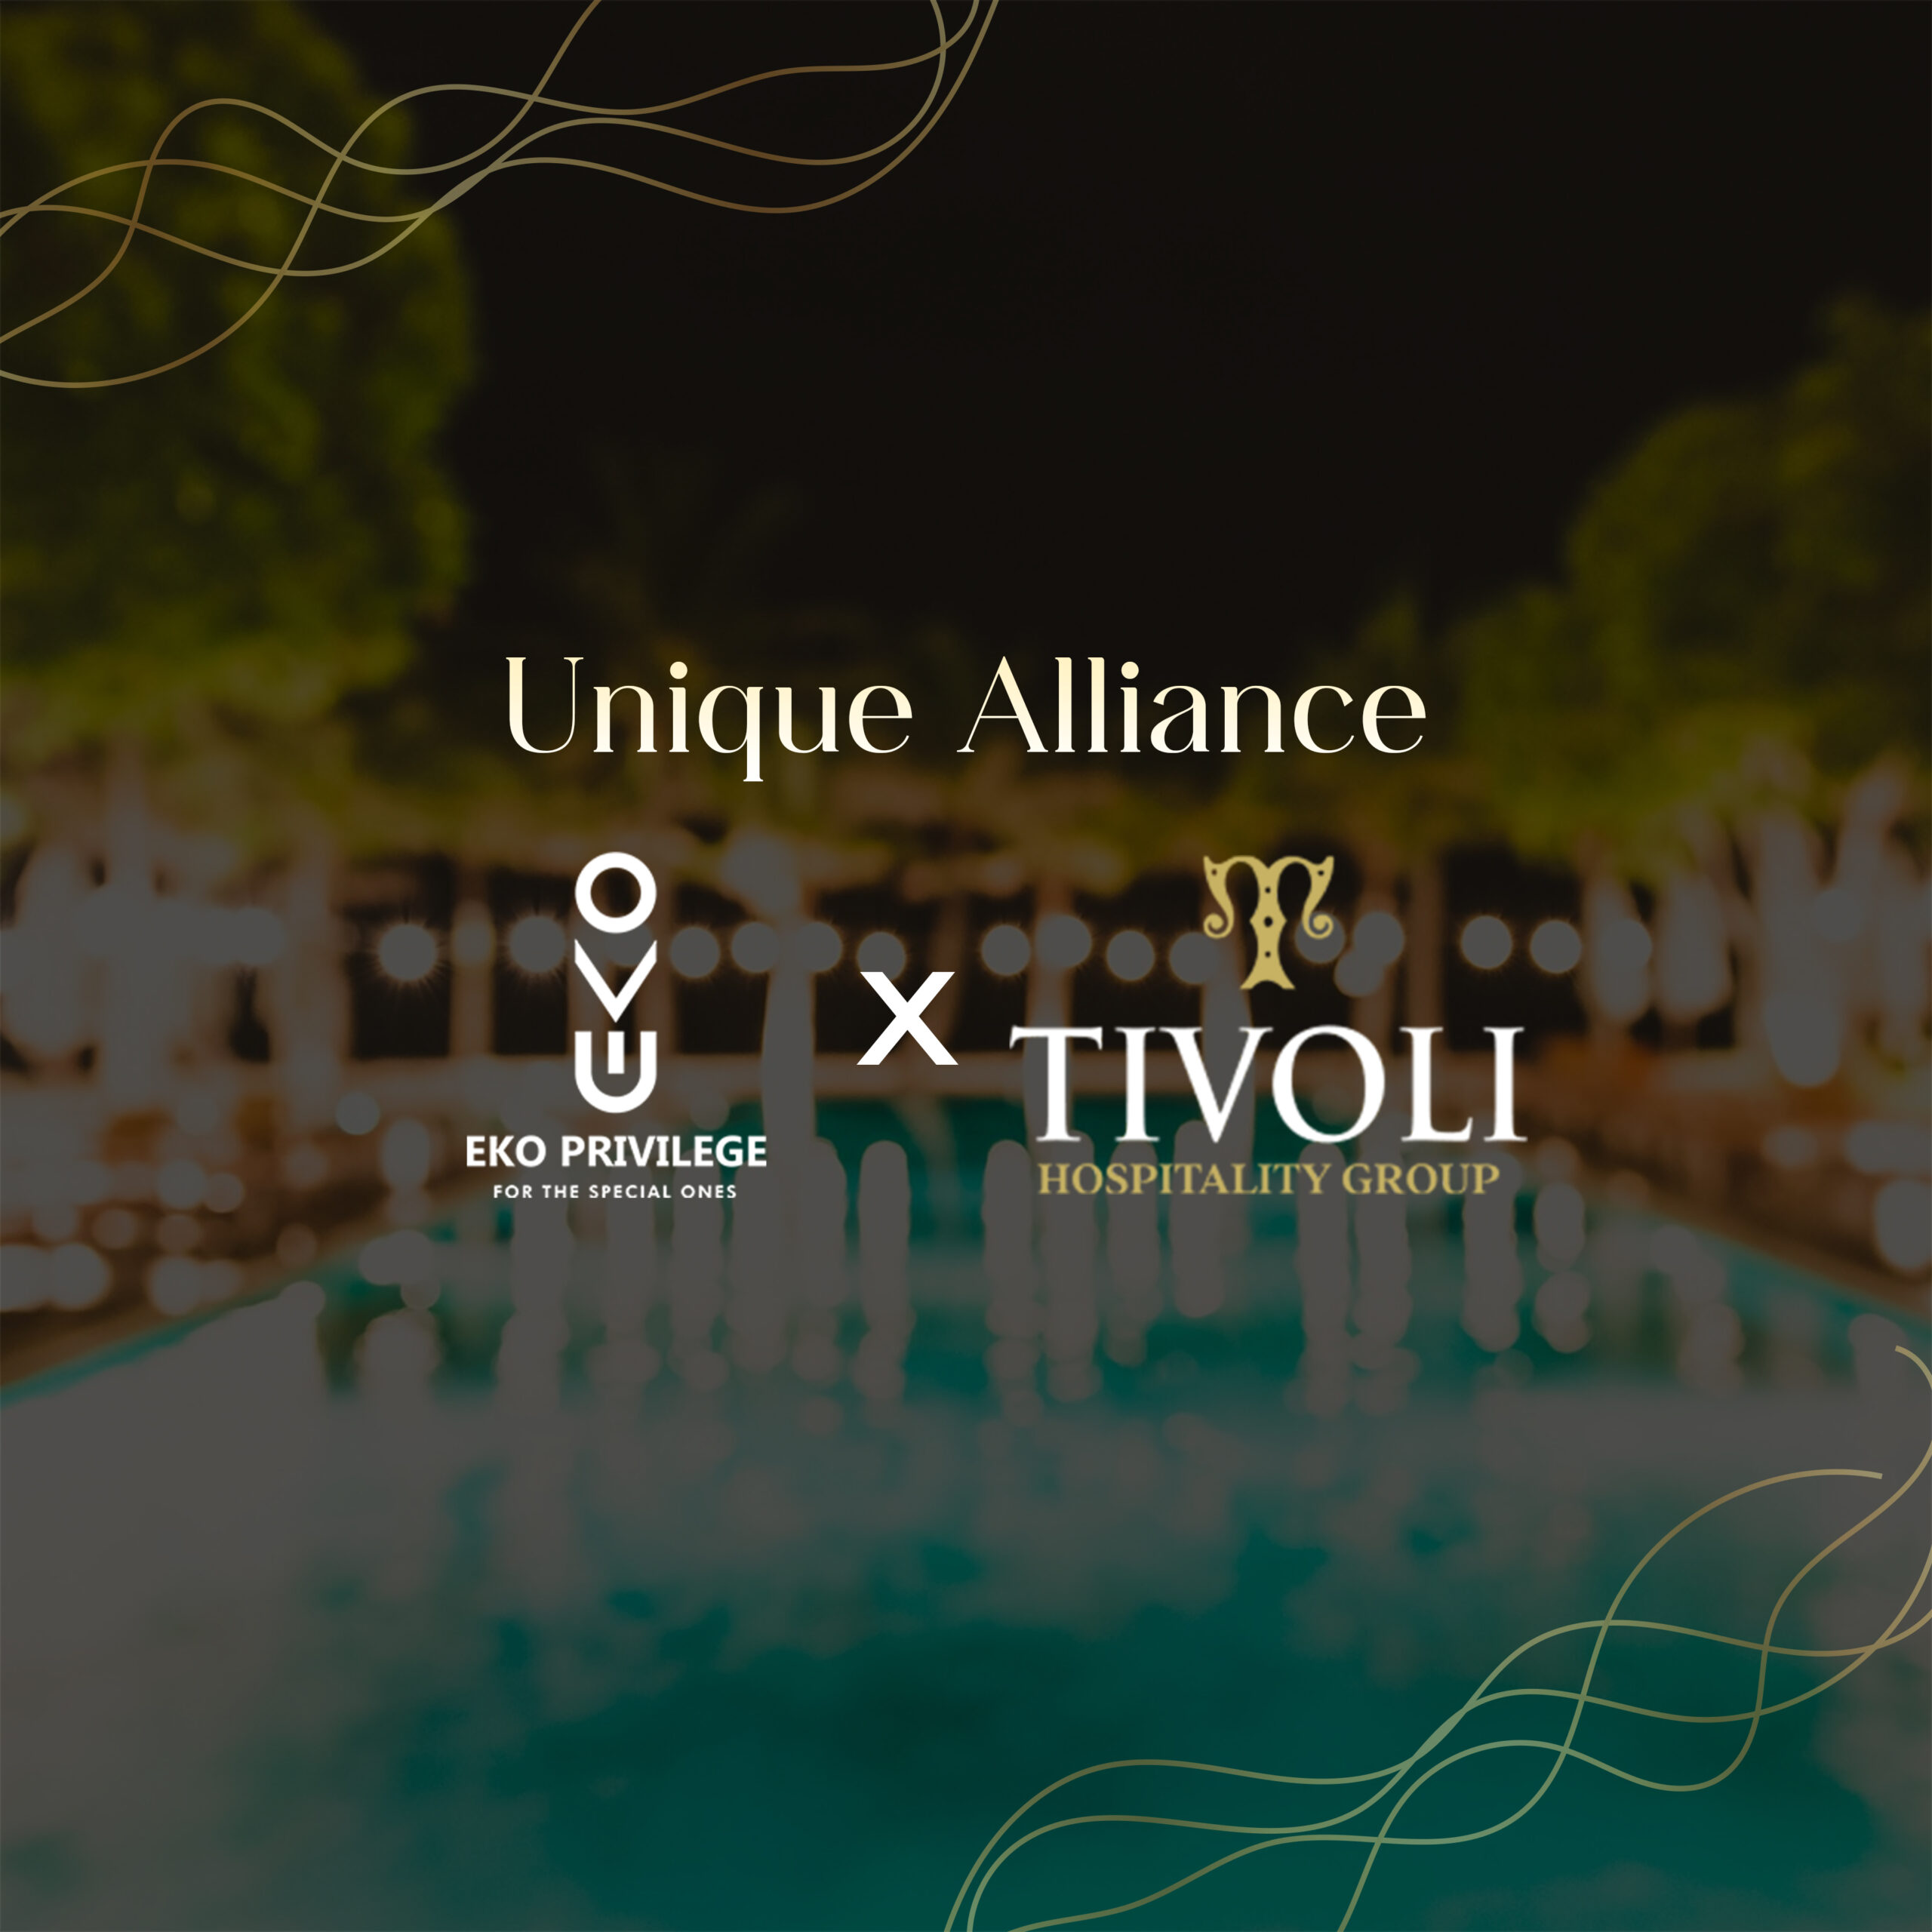 alliance with Tivoli Hospitality Group & Eko Resort